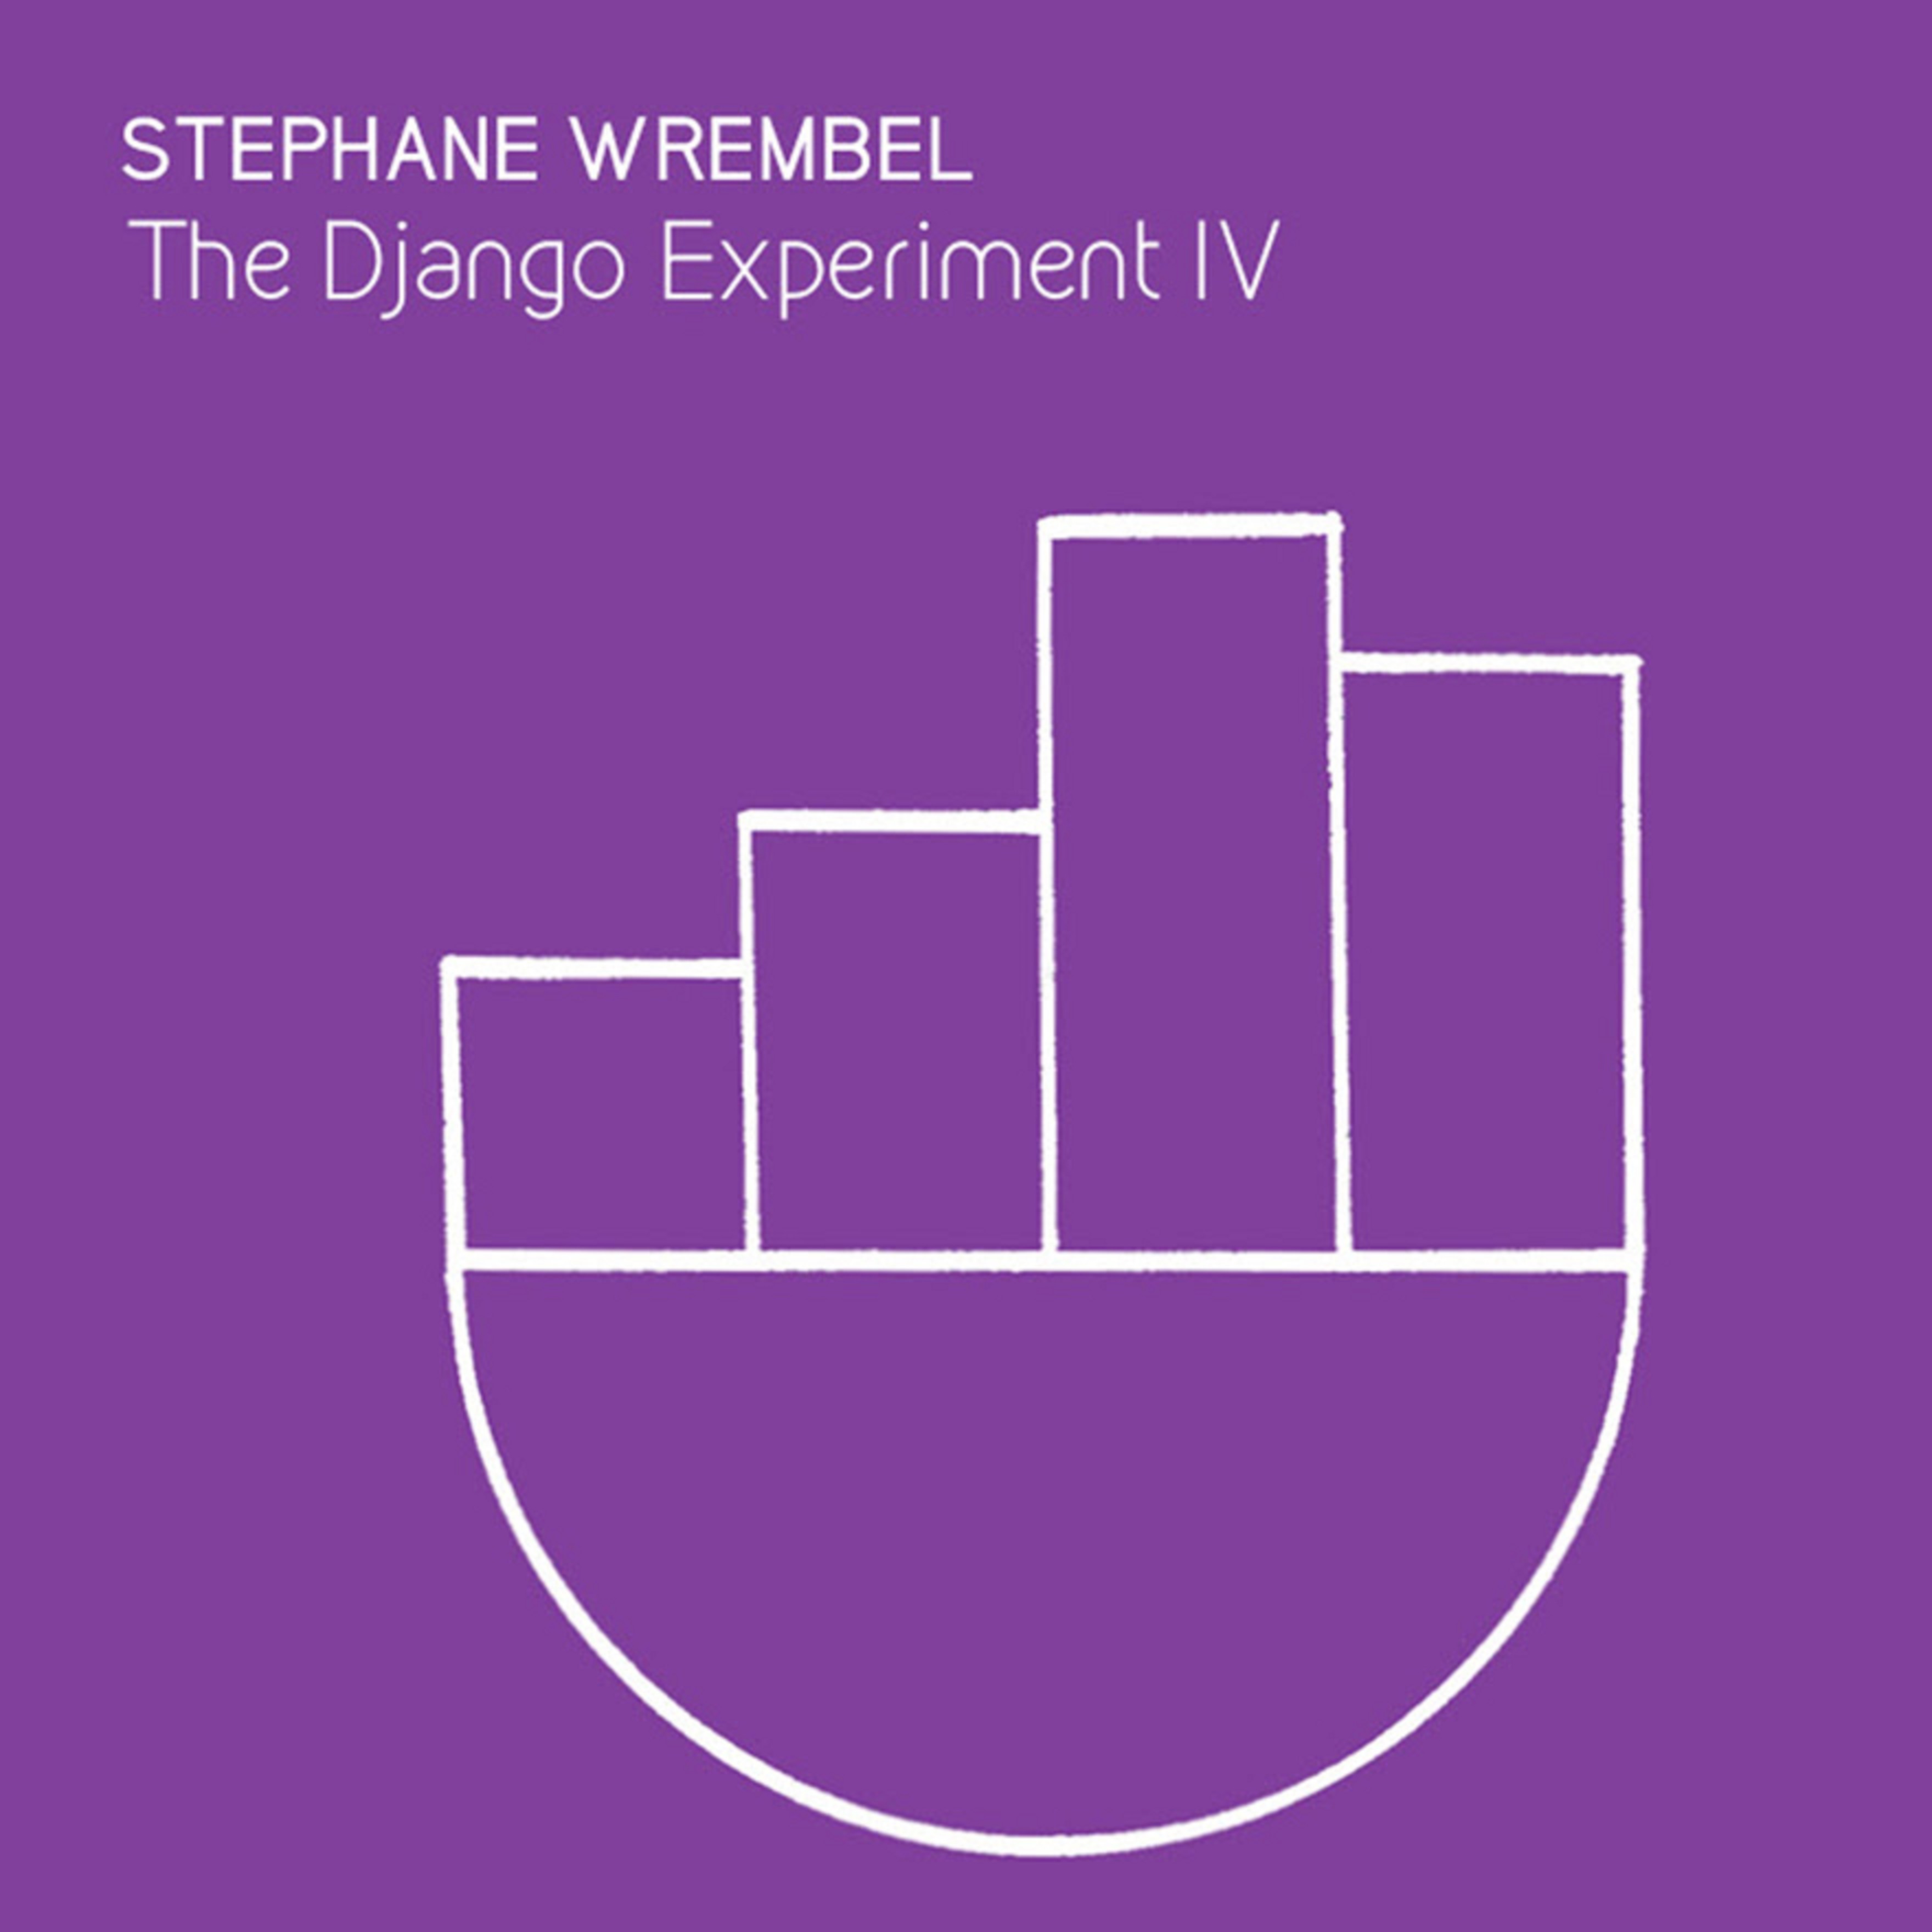 STEPHANE WREMBEL to release The Django Experiment IV